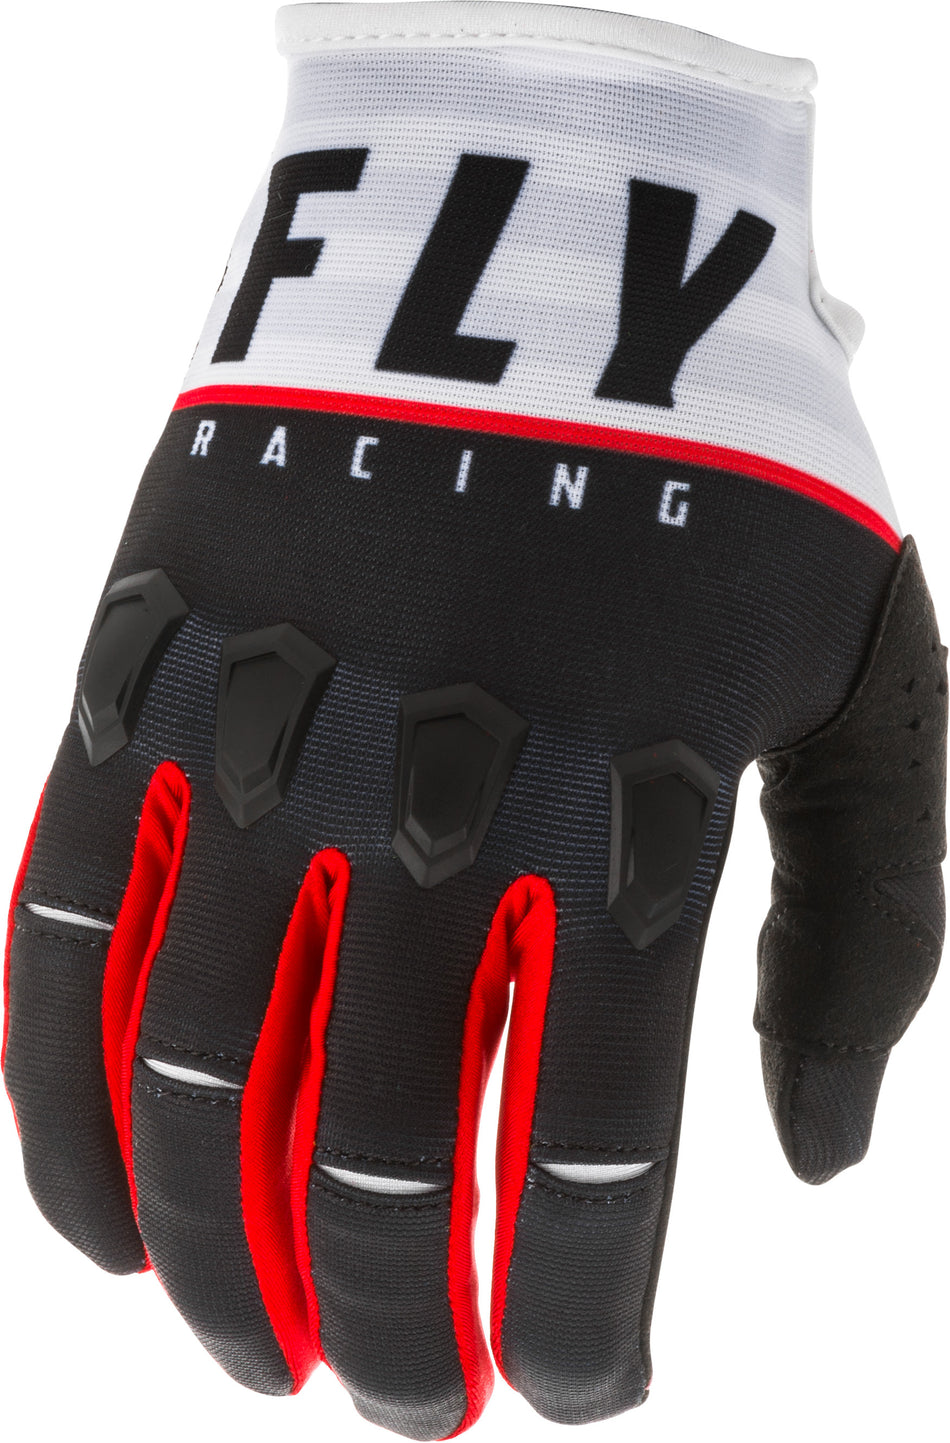 FLY RACING Kinetic K120 Gloves Black/White/Red Sz 07 373-41307